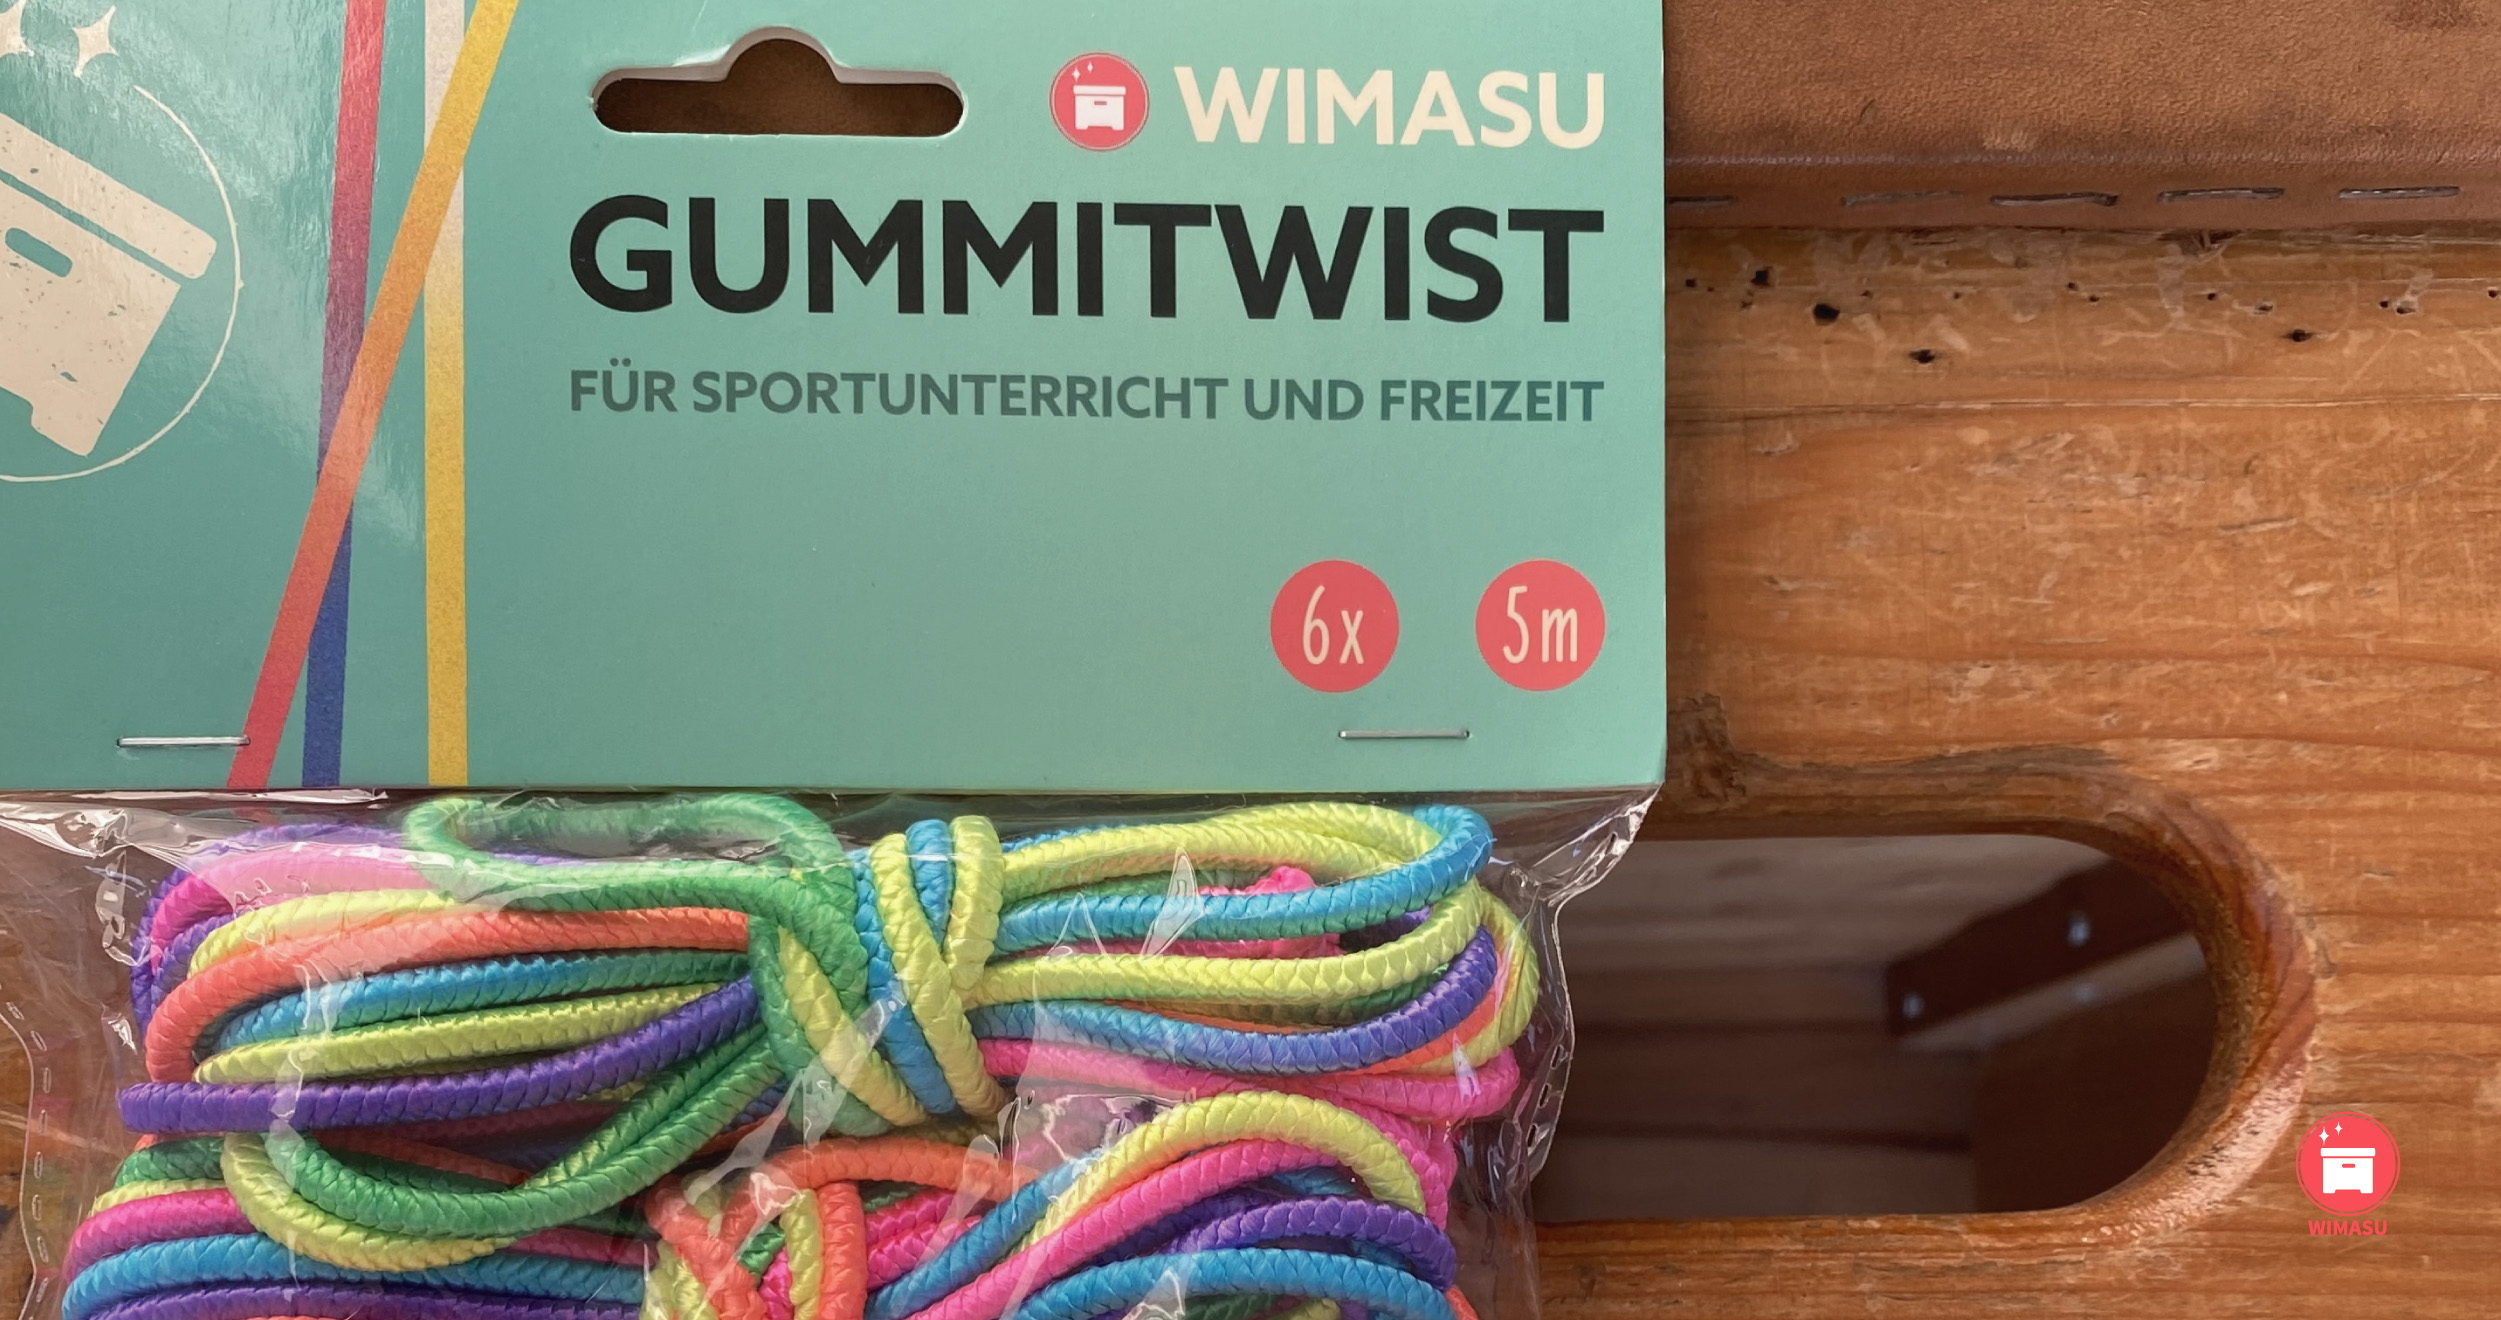 NEU original WIMASU Gummitwists im 6er Pack